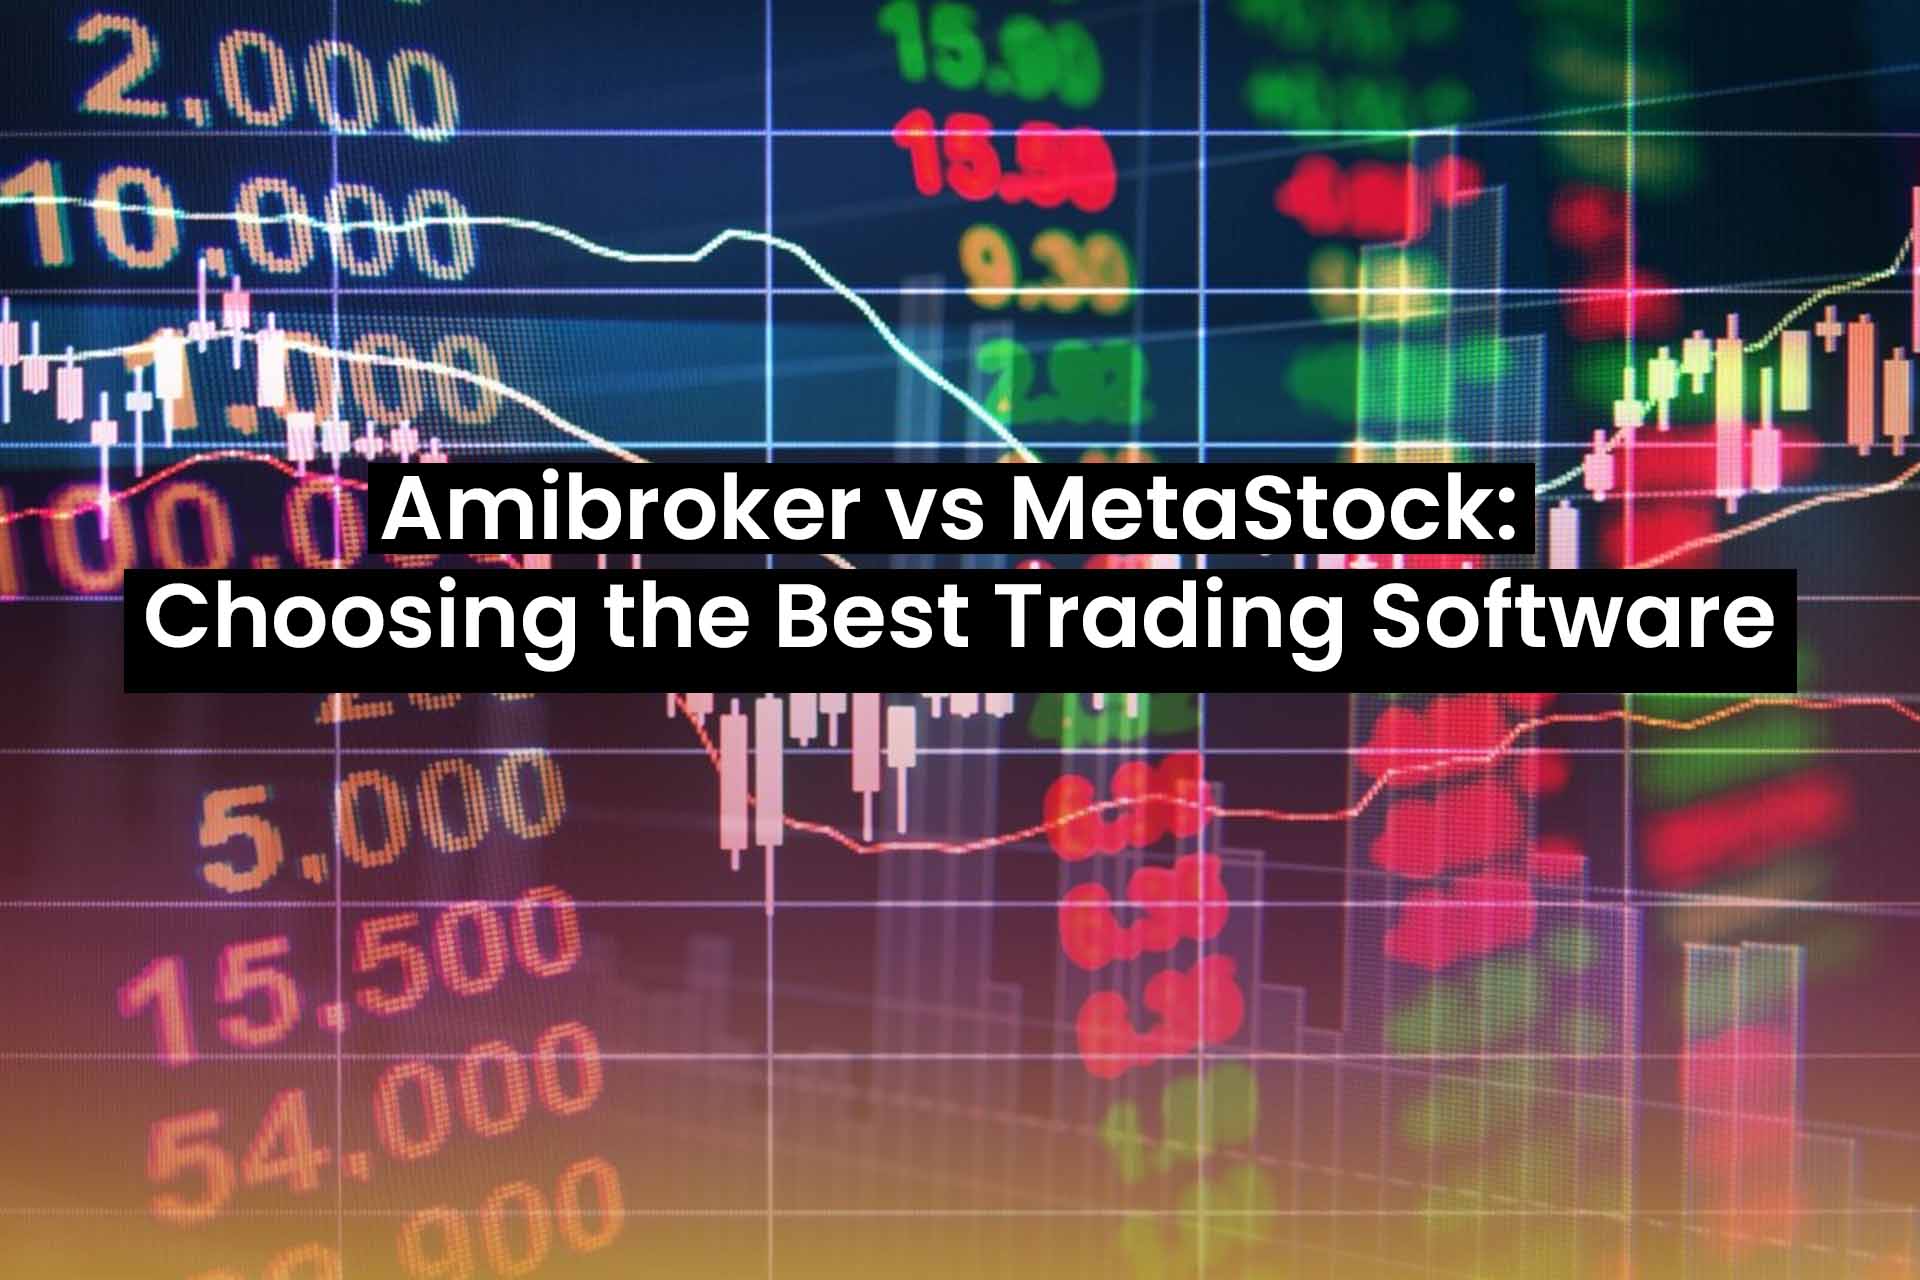 Amibroker vs MetaStock: Choosing the Best Trading Software